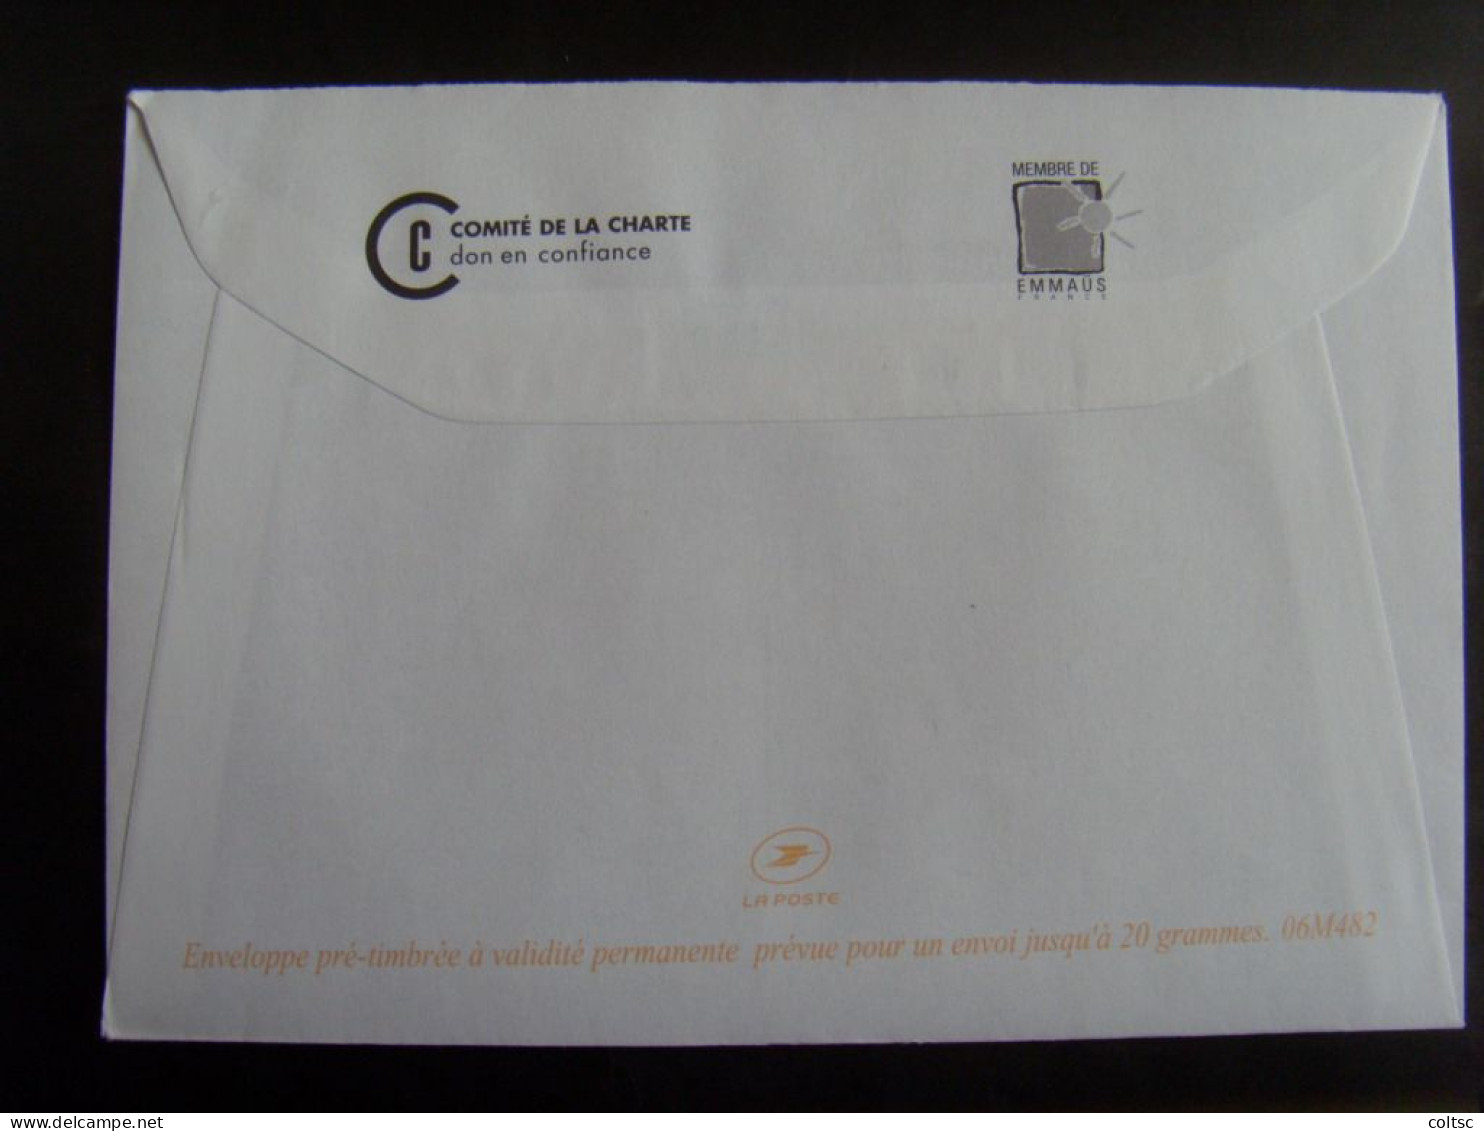 18564- PAP TSC Lamouche Phl@poste Fondation Abbé Pierre, Agr. 06M482, Obl - Prêts-à-poster:Stamped On Demand & Semi-official Overprinting (1995-...)